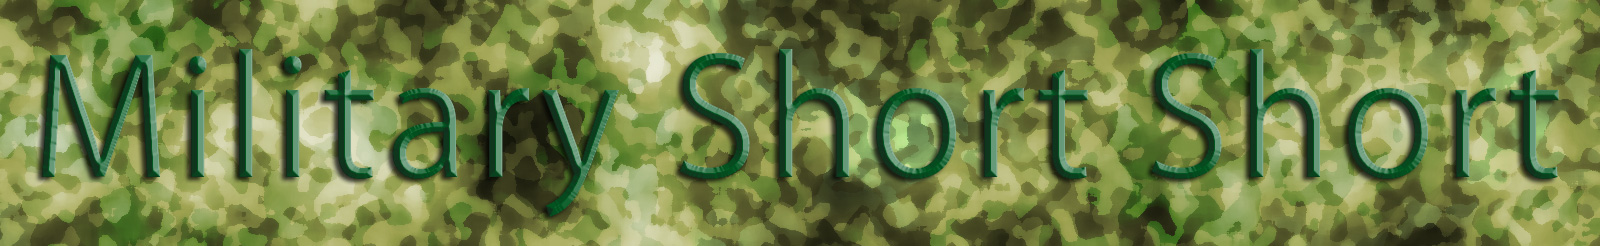 Military Short Short